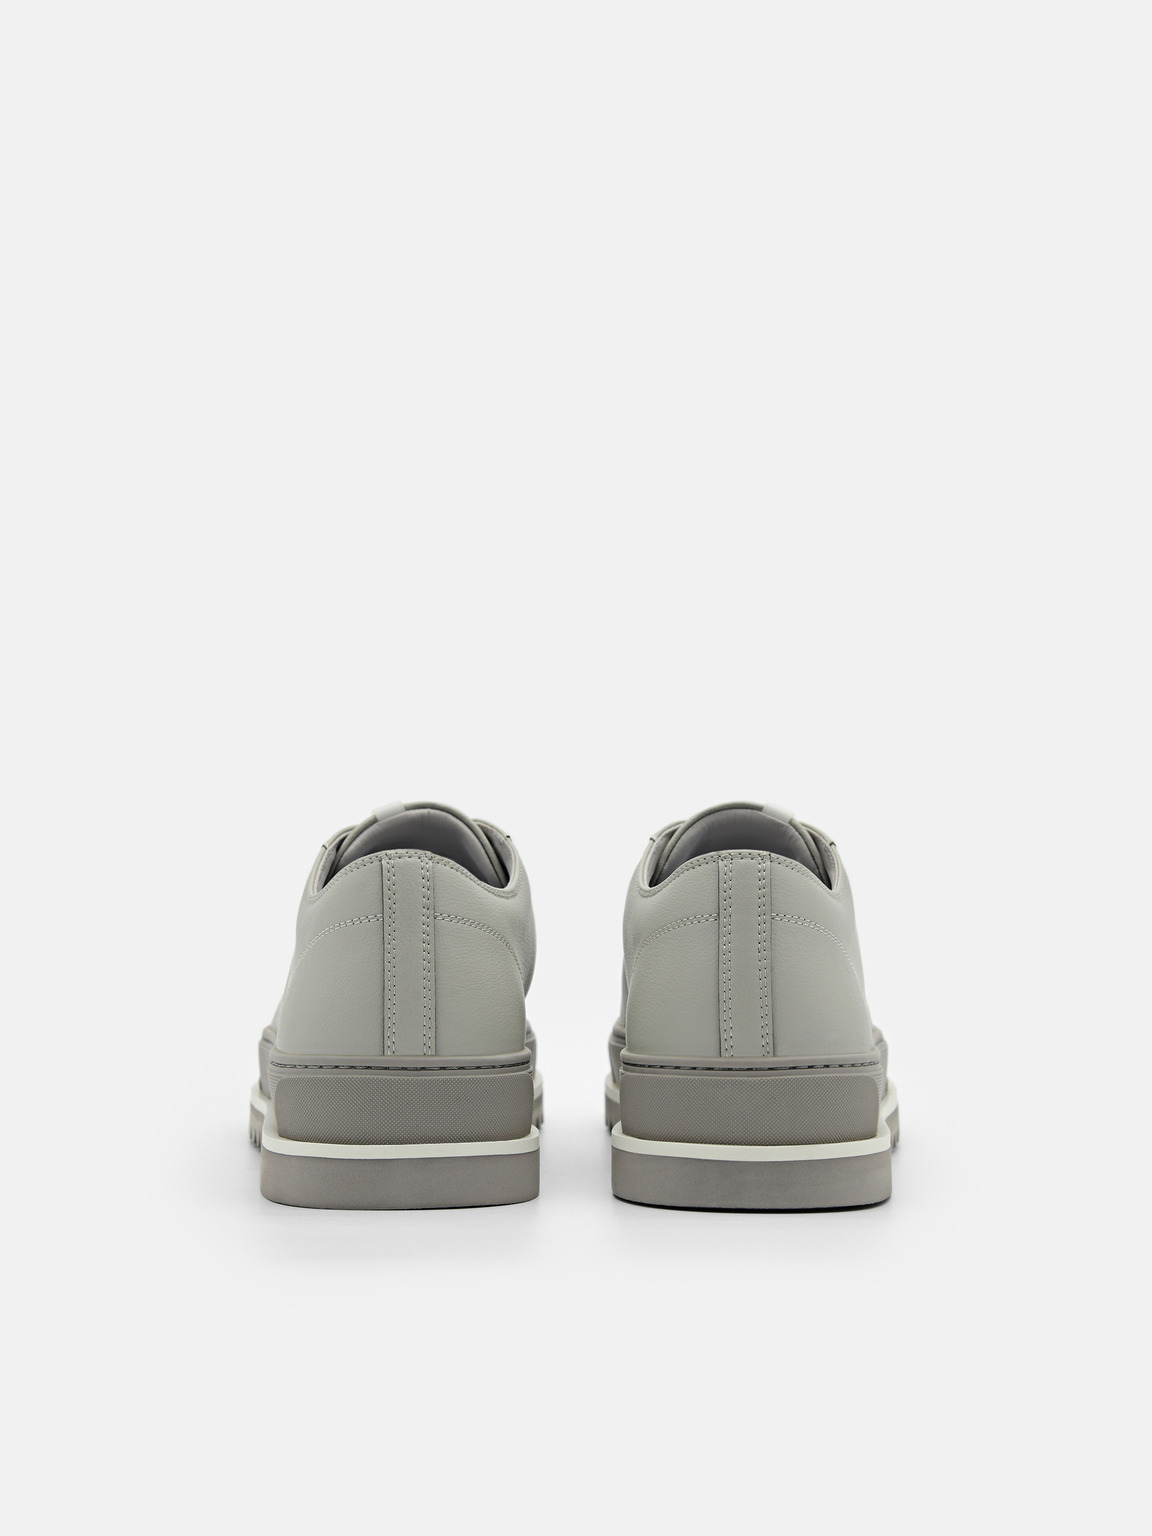 Owen球鞋, 浅灰色